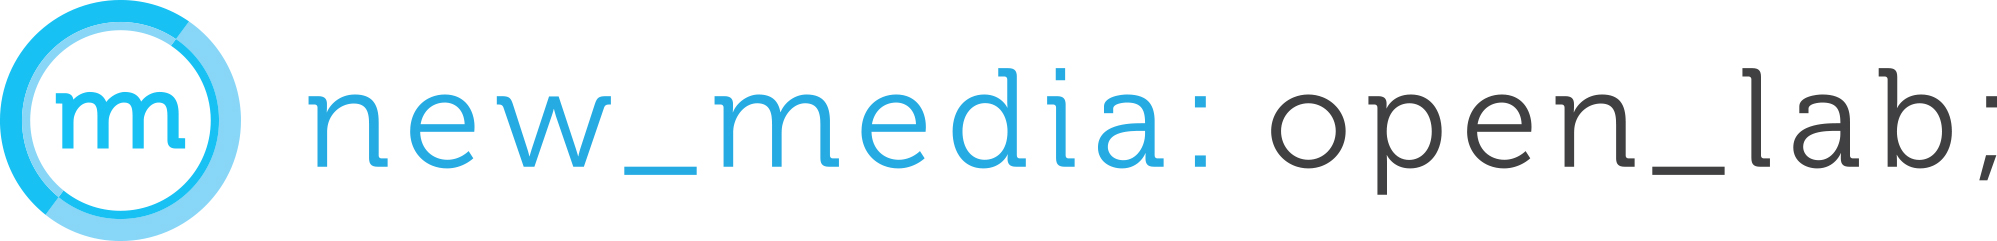 newmediaopenlab_logo